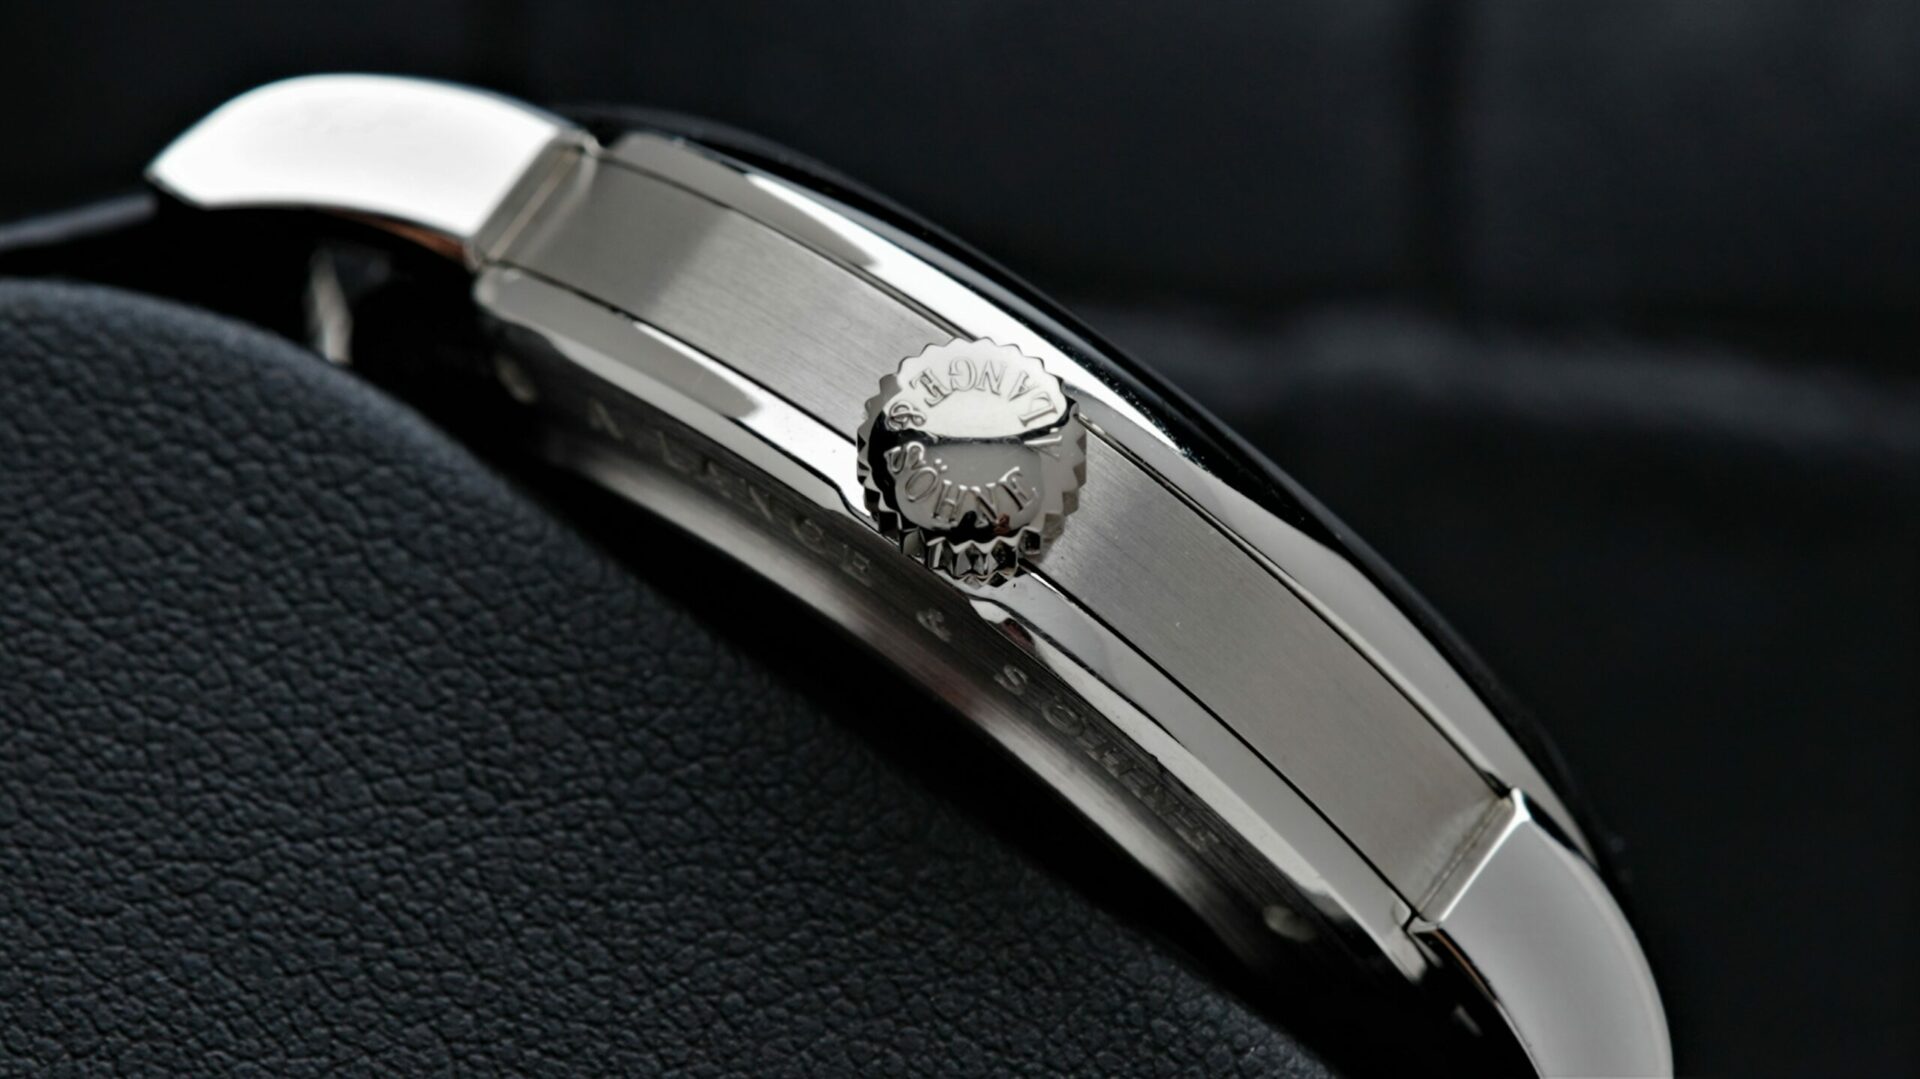 Side shot showing case and crown on the A. Lange & Söhne Richard Lange Platinum watch.